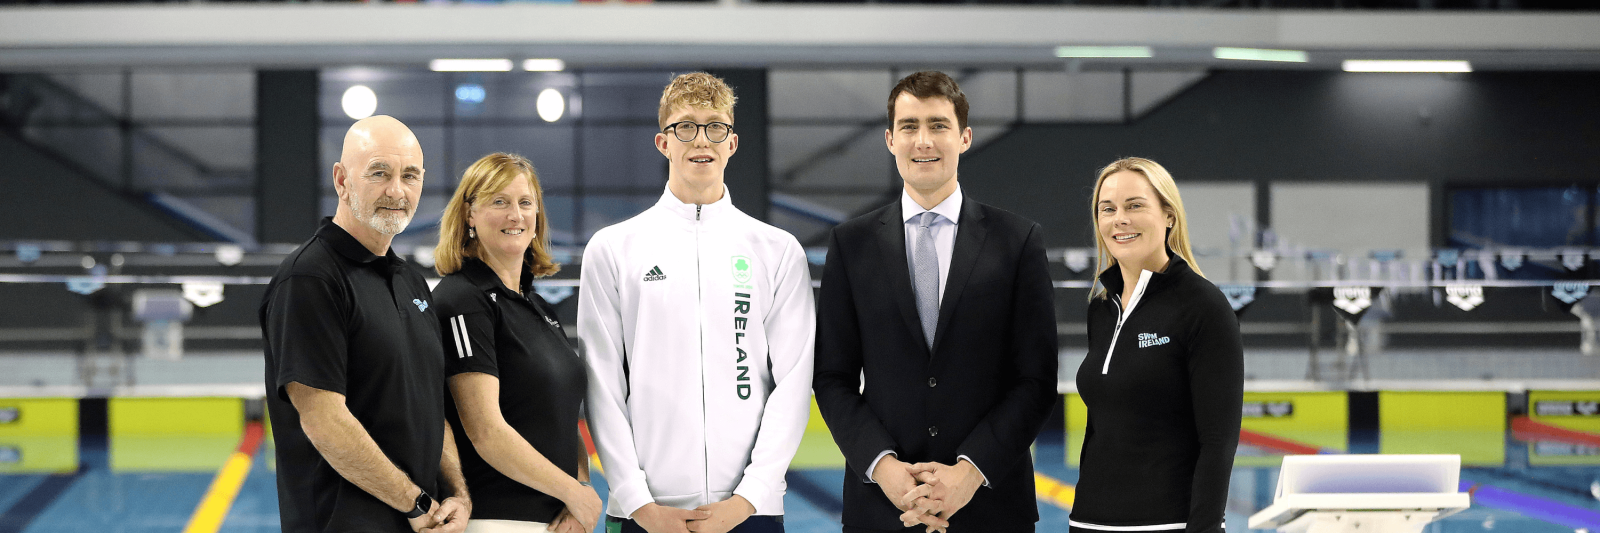 Ireland Announced as Host of Inaugural European U23 Swimming Championships